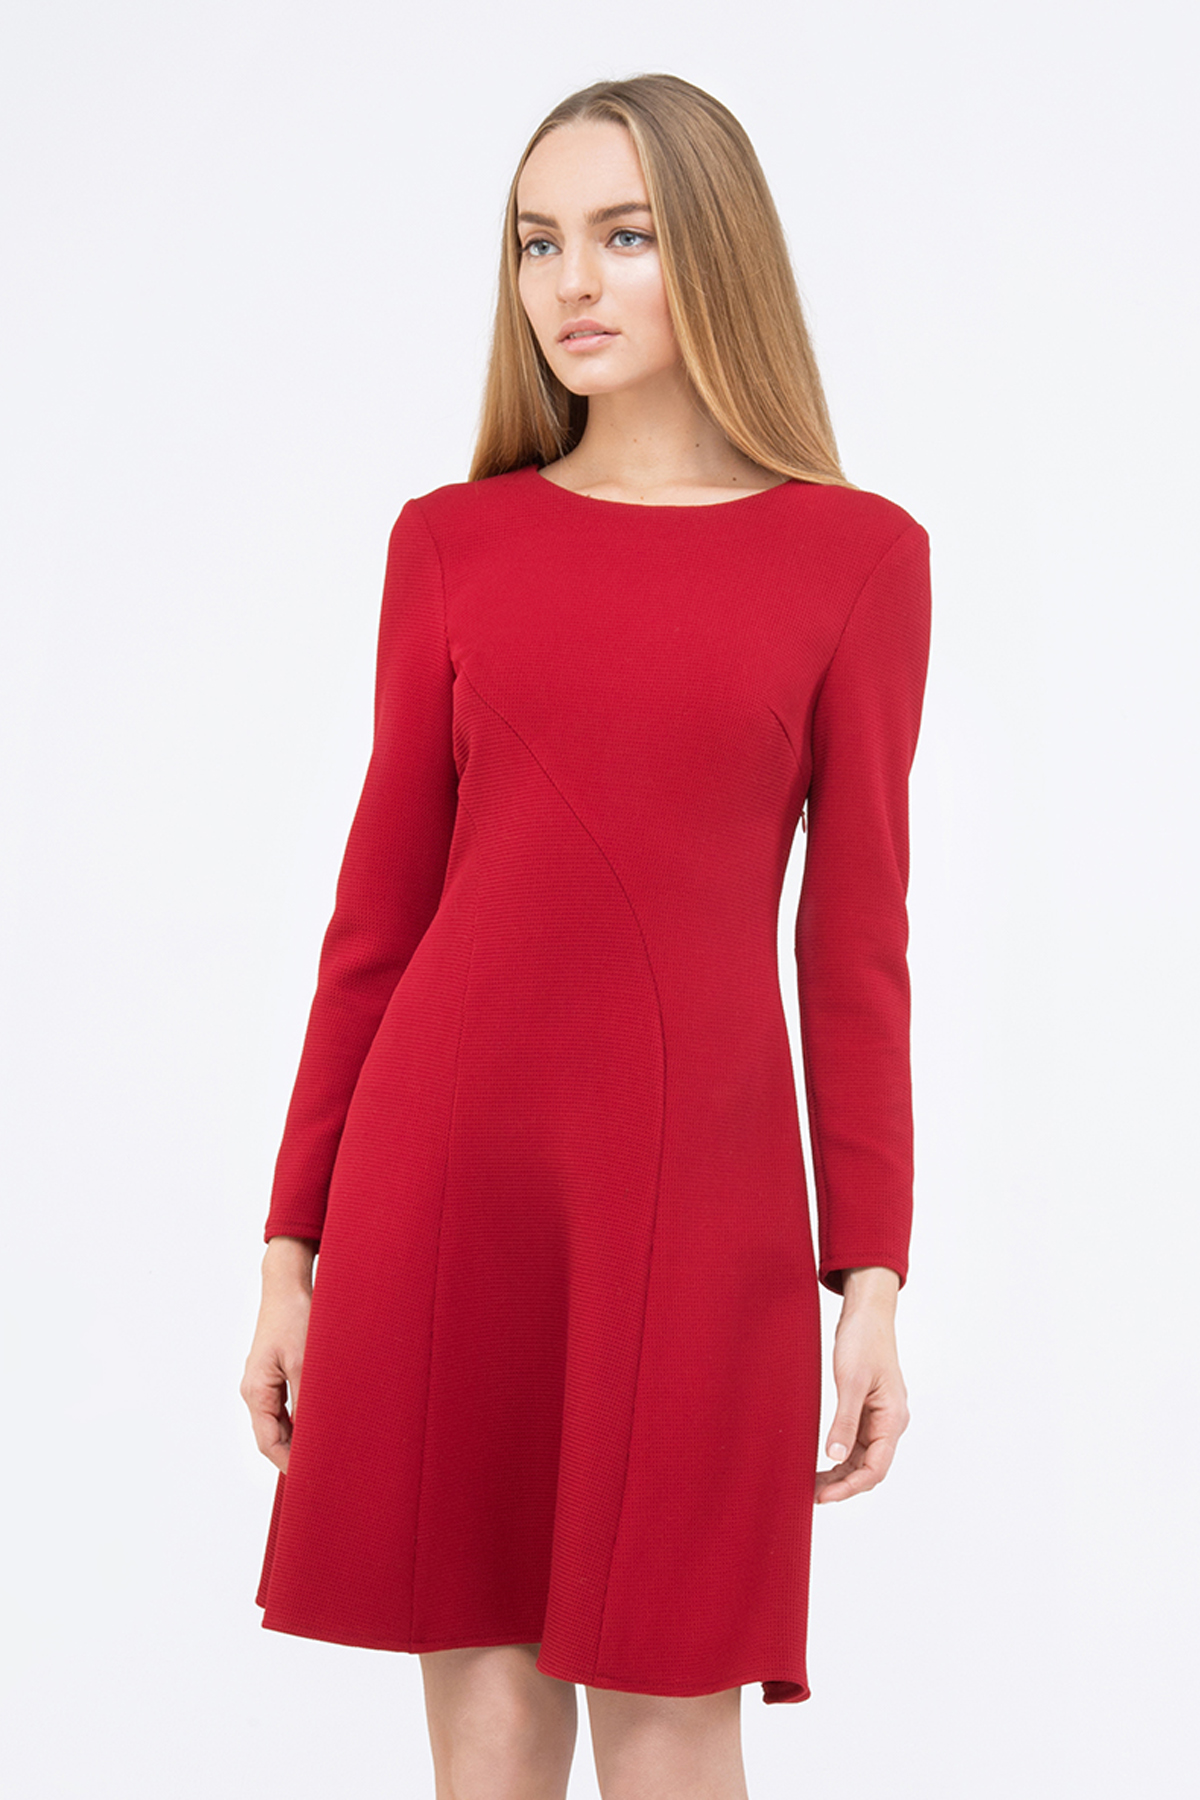 Red A-line dress , photo 6